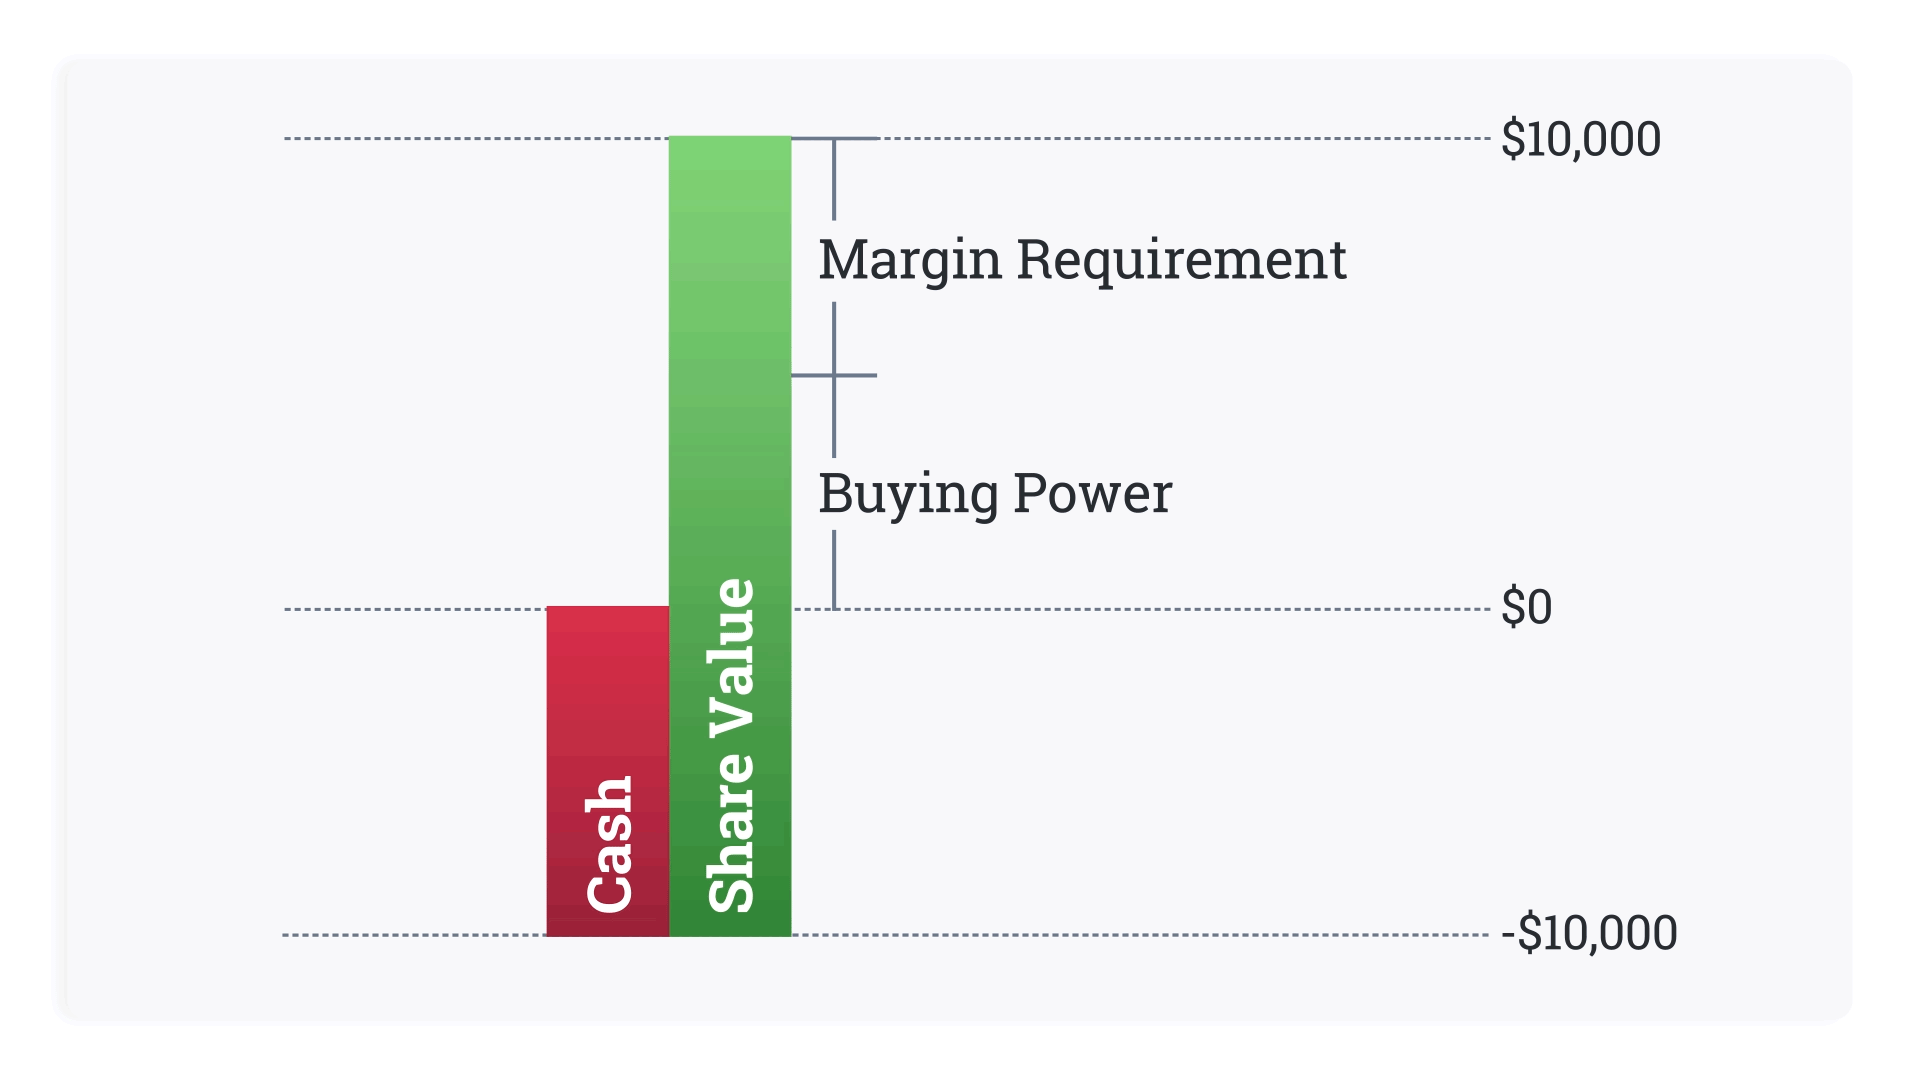 What happens when margin shares decrease in value